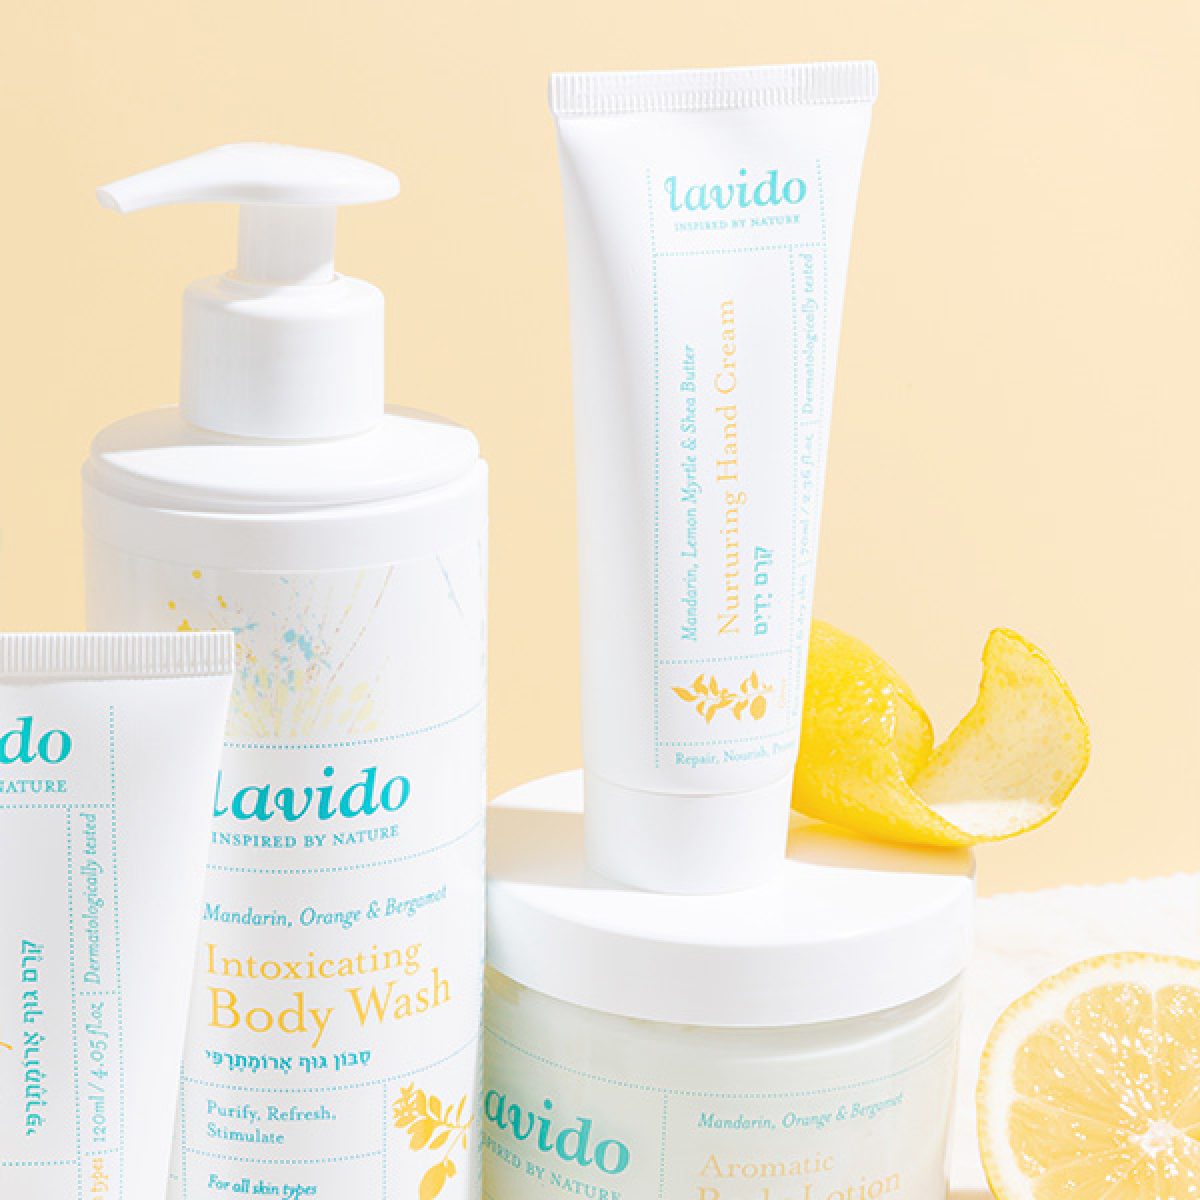 Lavido Nurturing Hand Cream